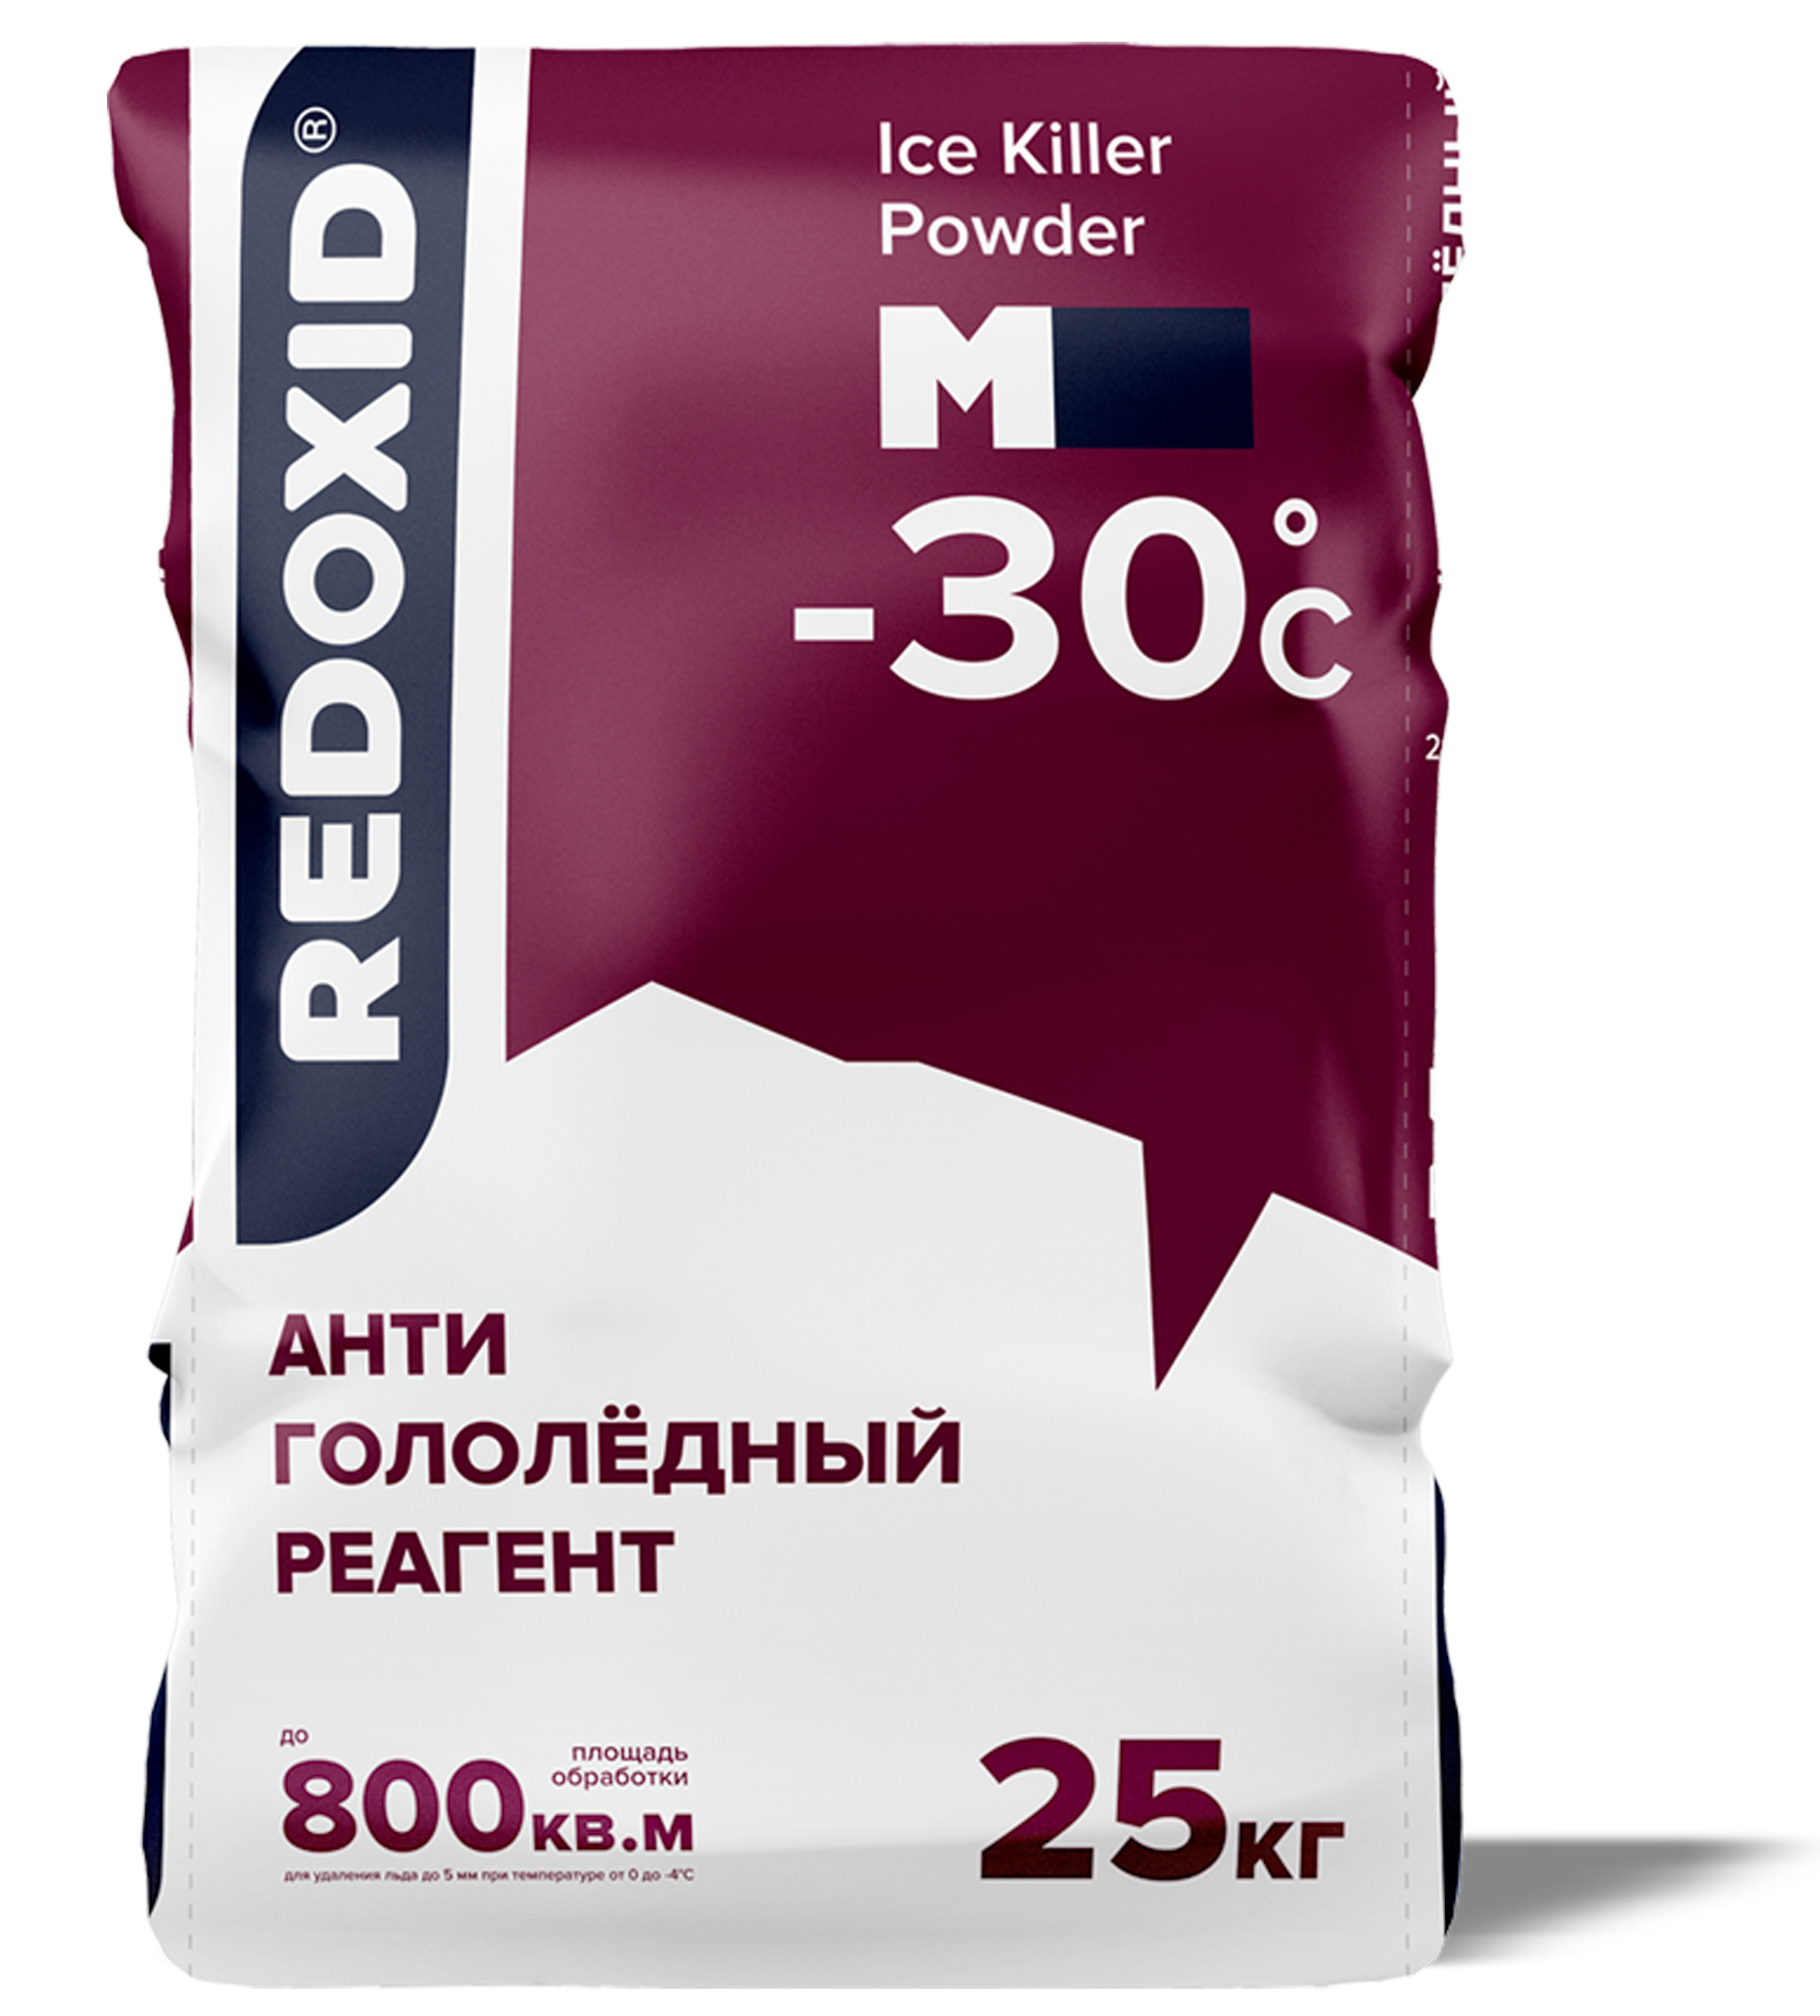 2104-25 • Ice Killer Powder M (Айс Киллер Паудер М) 25кг, Антигололёдный реагент для t не ниже -30С